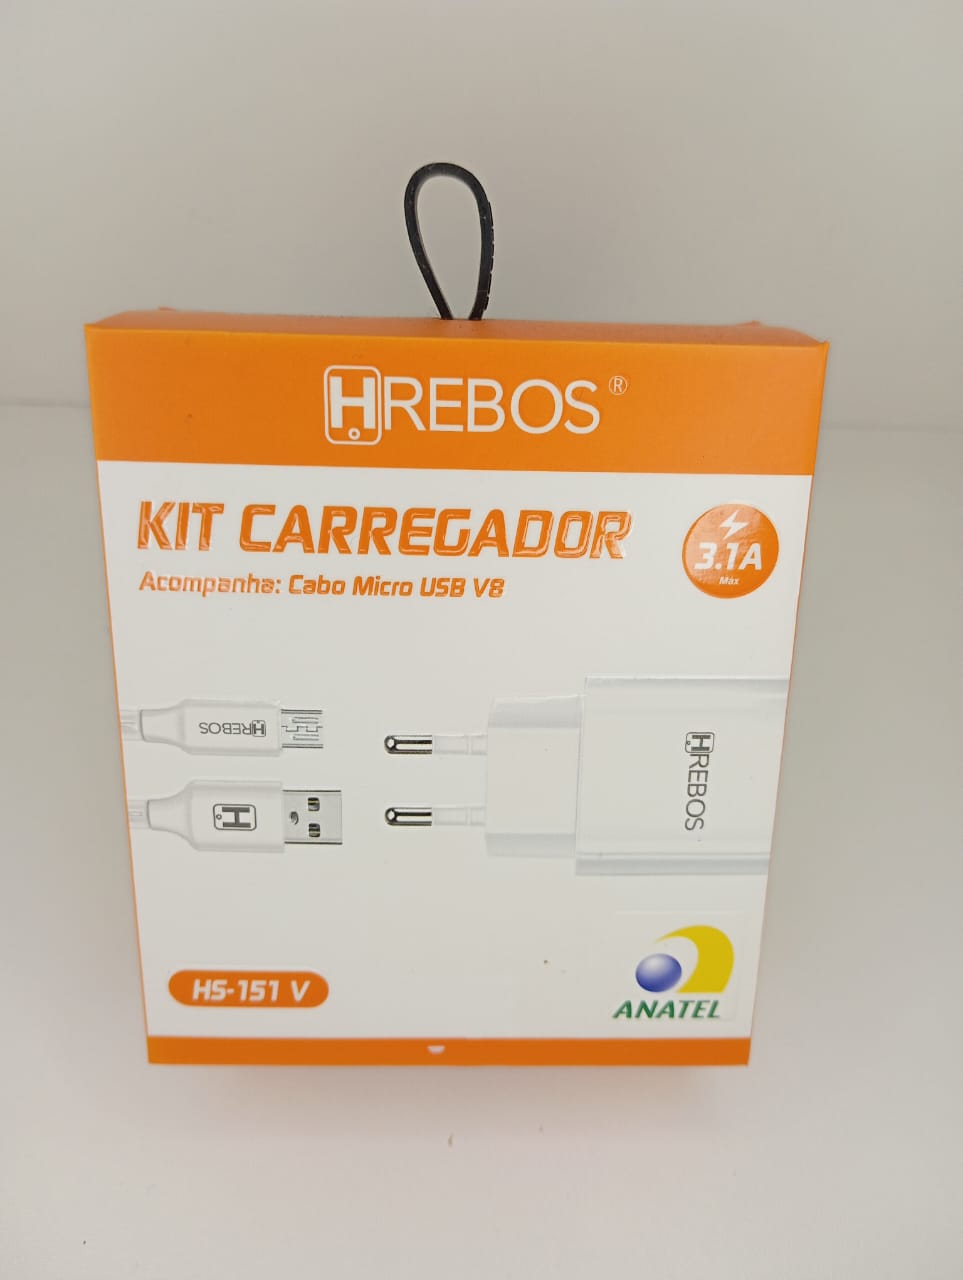 2689-2286-Kit Carregador Hrebos 3.1A Cabo Usb V8 Hs-151V Branco